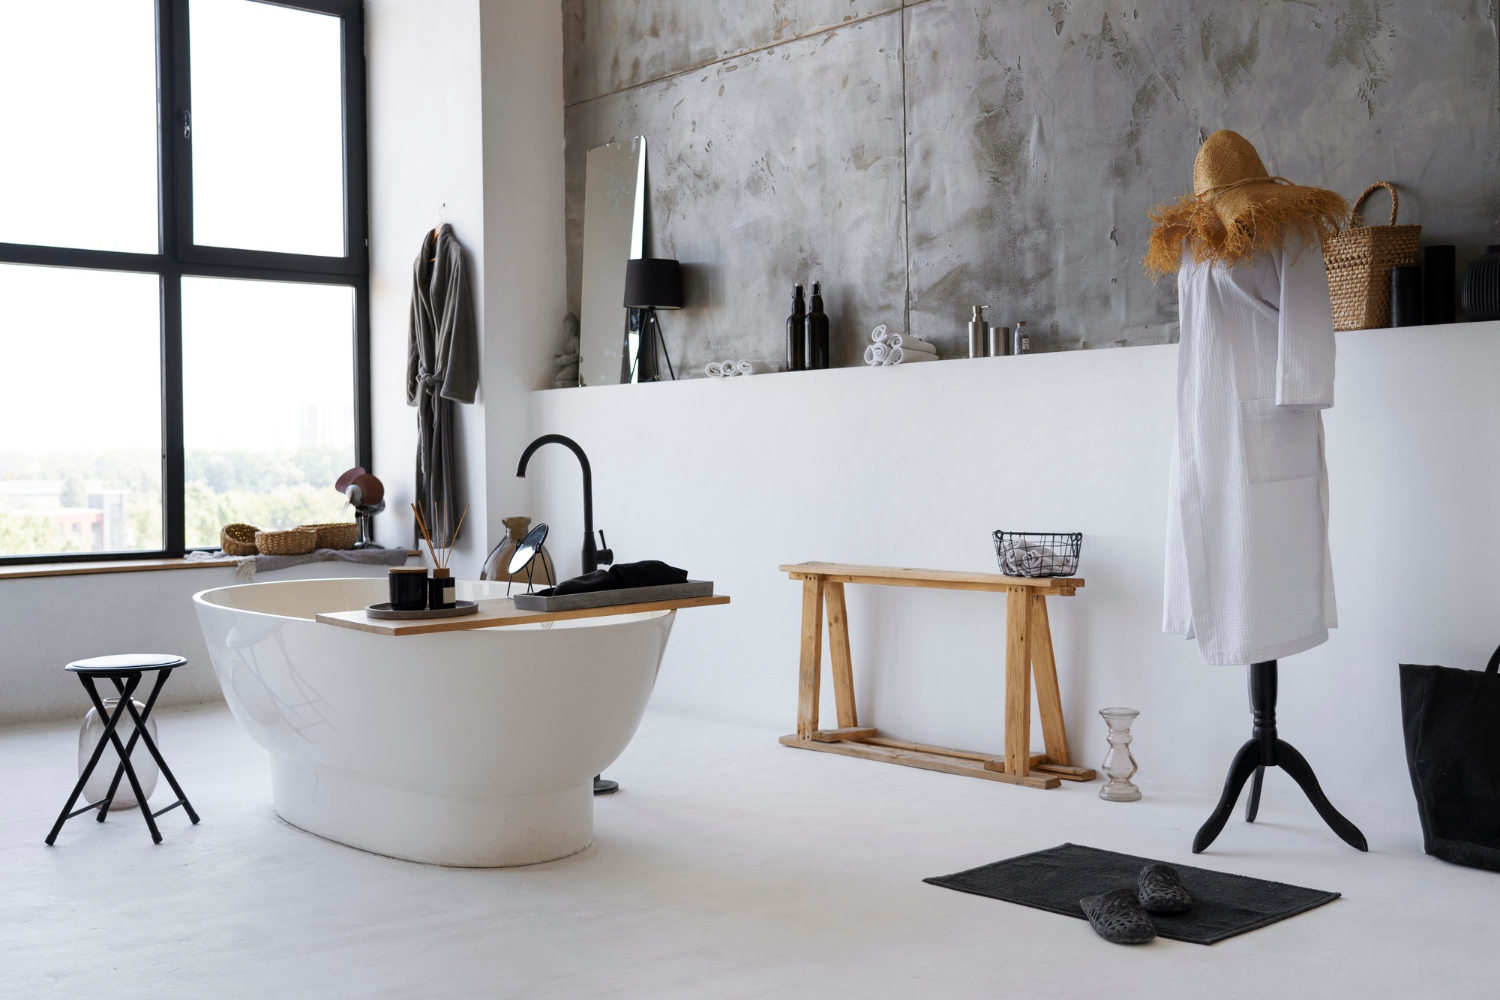 Ce ar trebui sa ai in baie pentru ca spatiul sa fie modern?